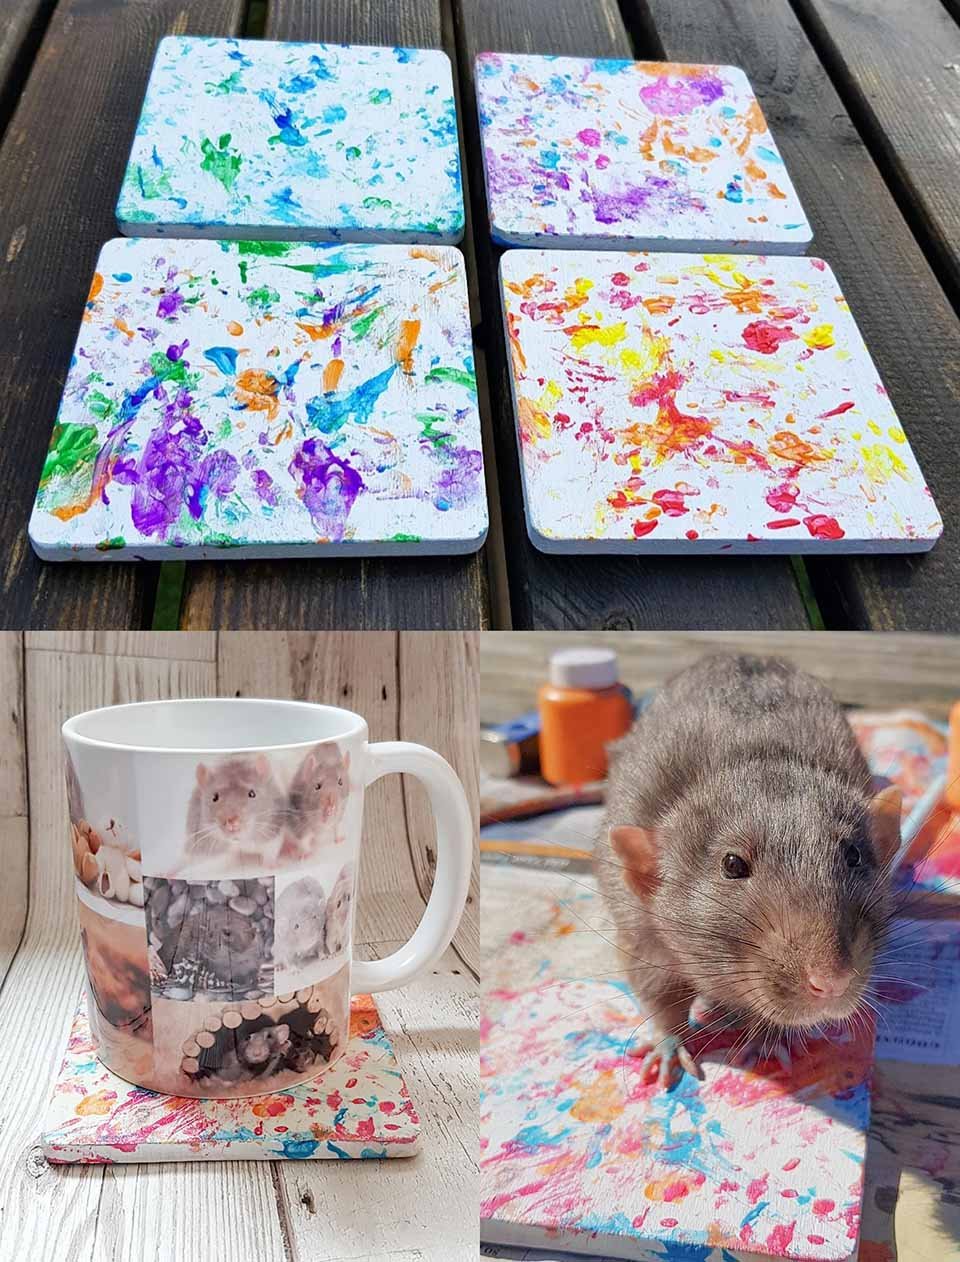 Arte creado por ratas